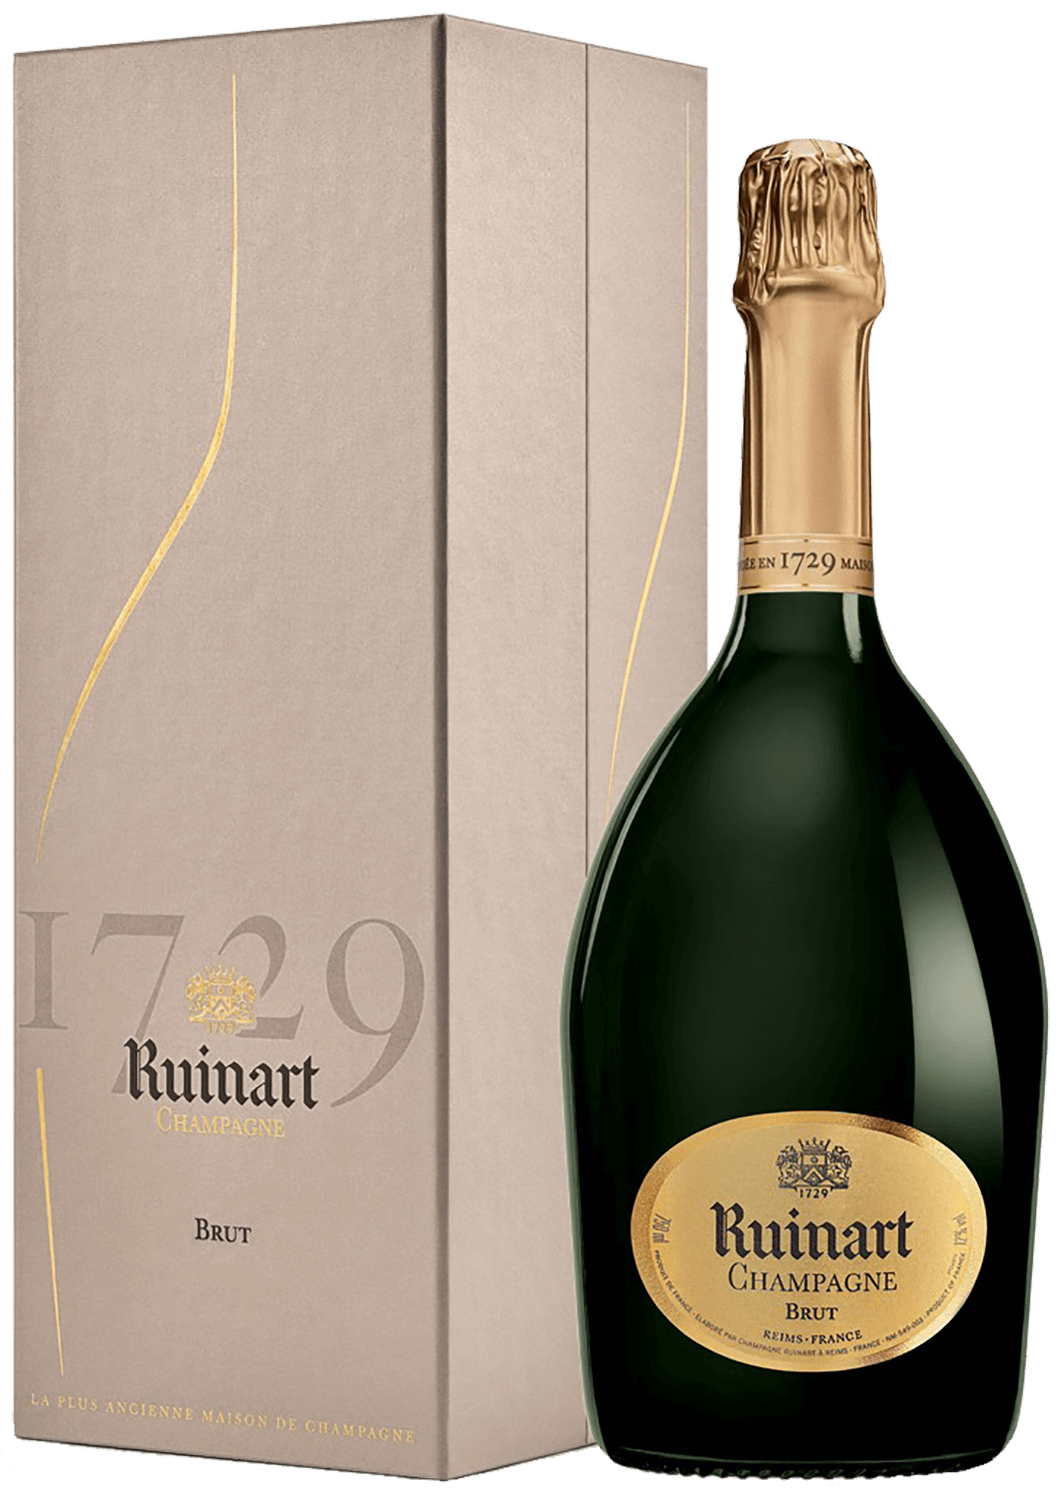 R de Ruinart Brut Champagne AOC (gift box) duval leroy femme de champagne brut nature champagne aoc